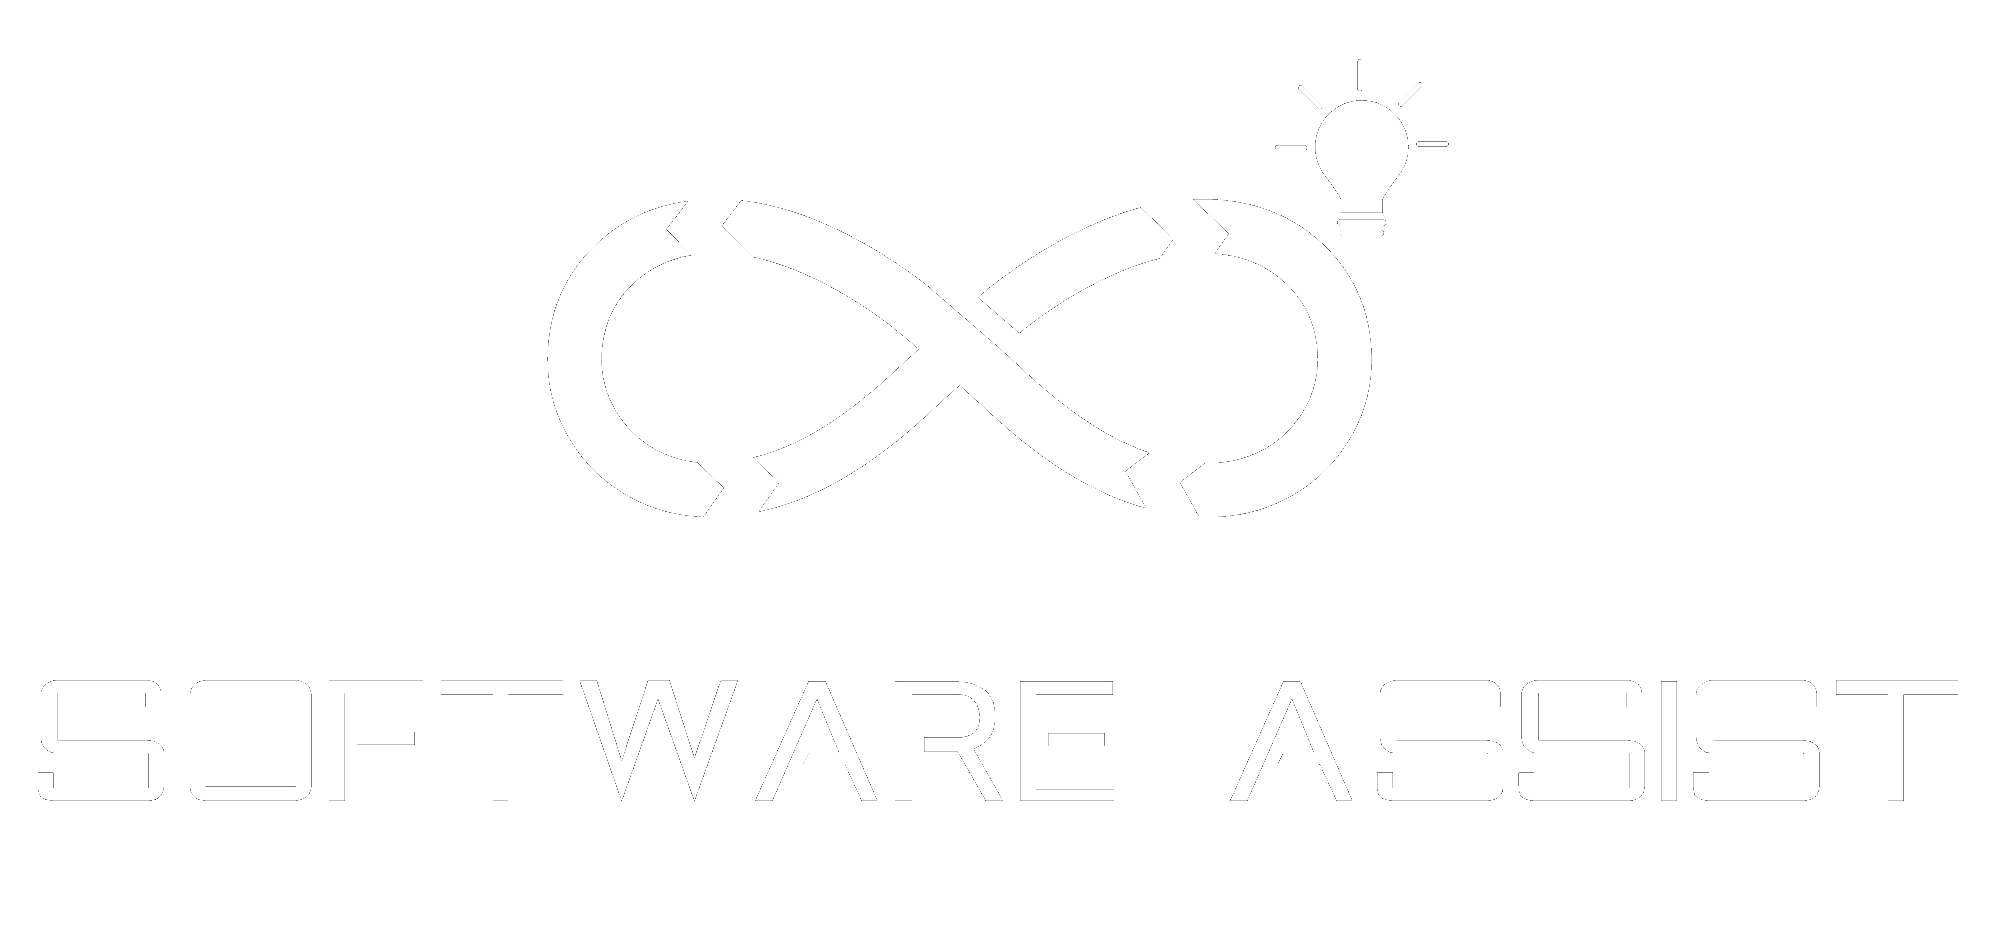 Software Assist